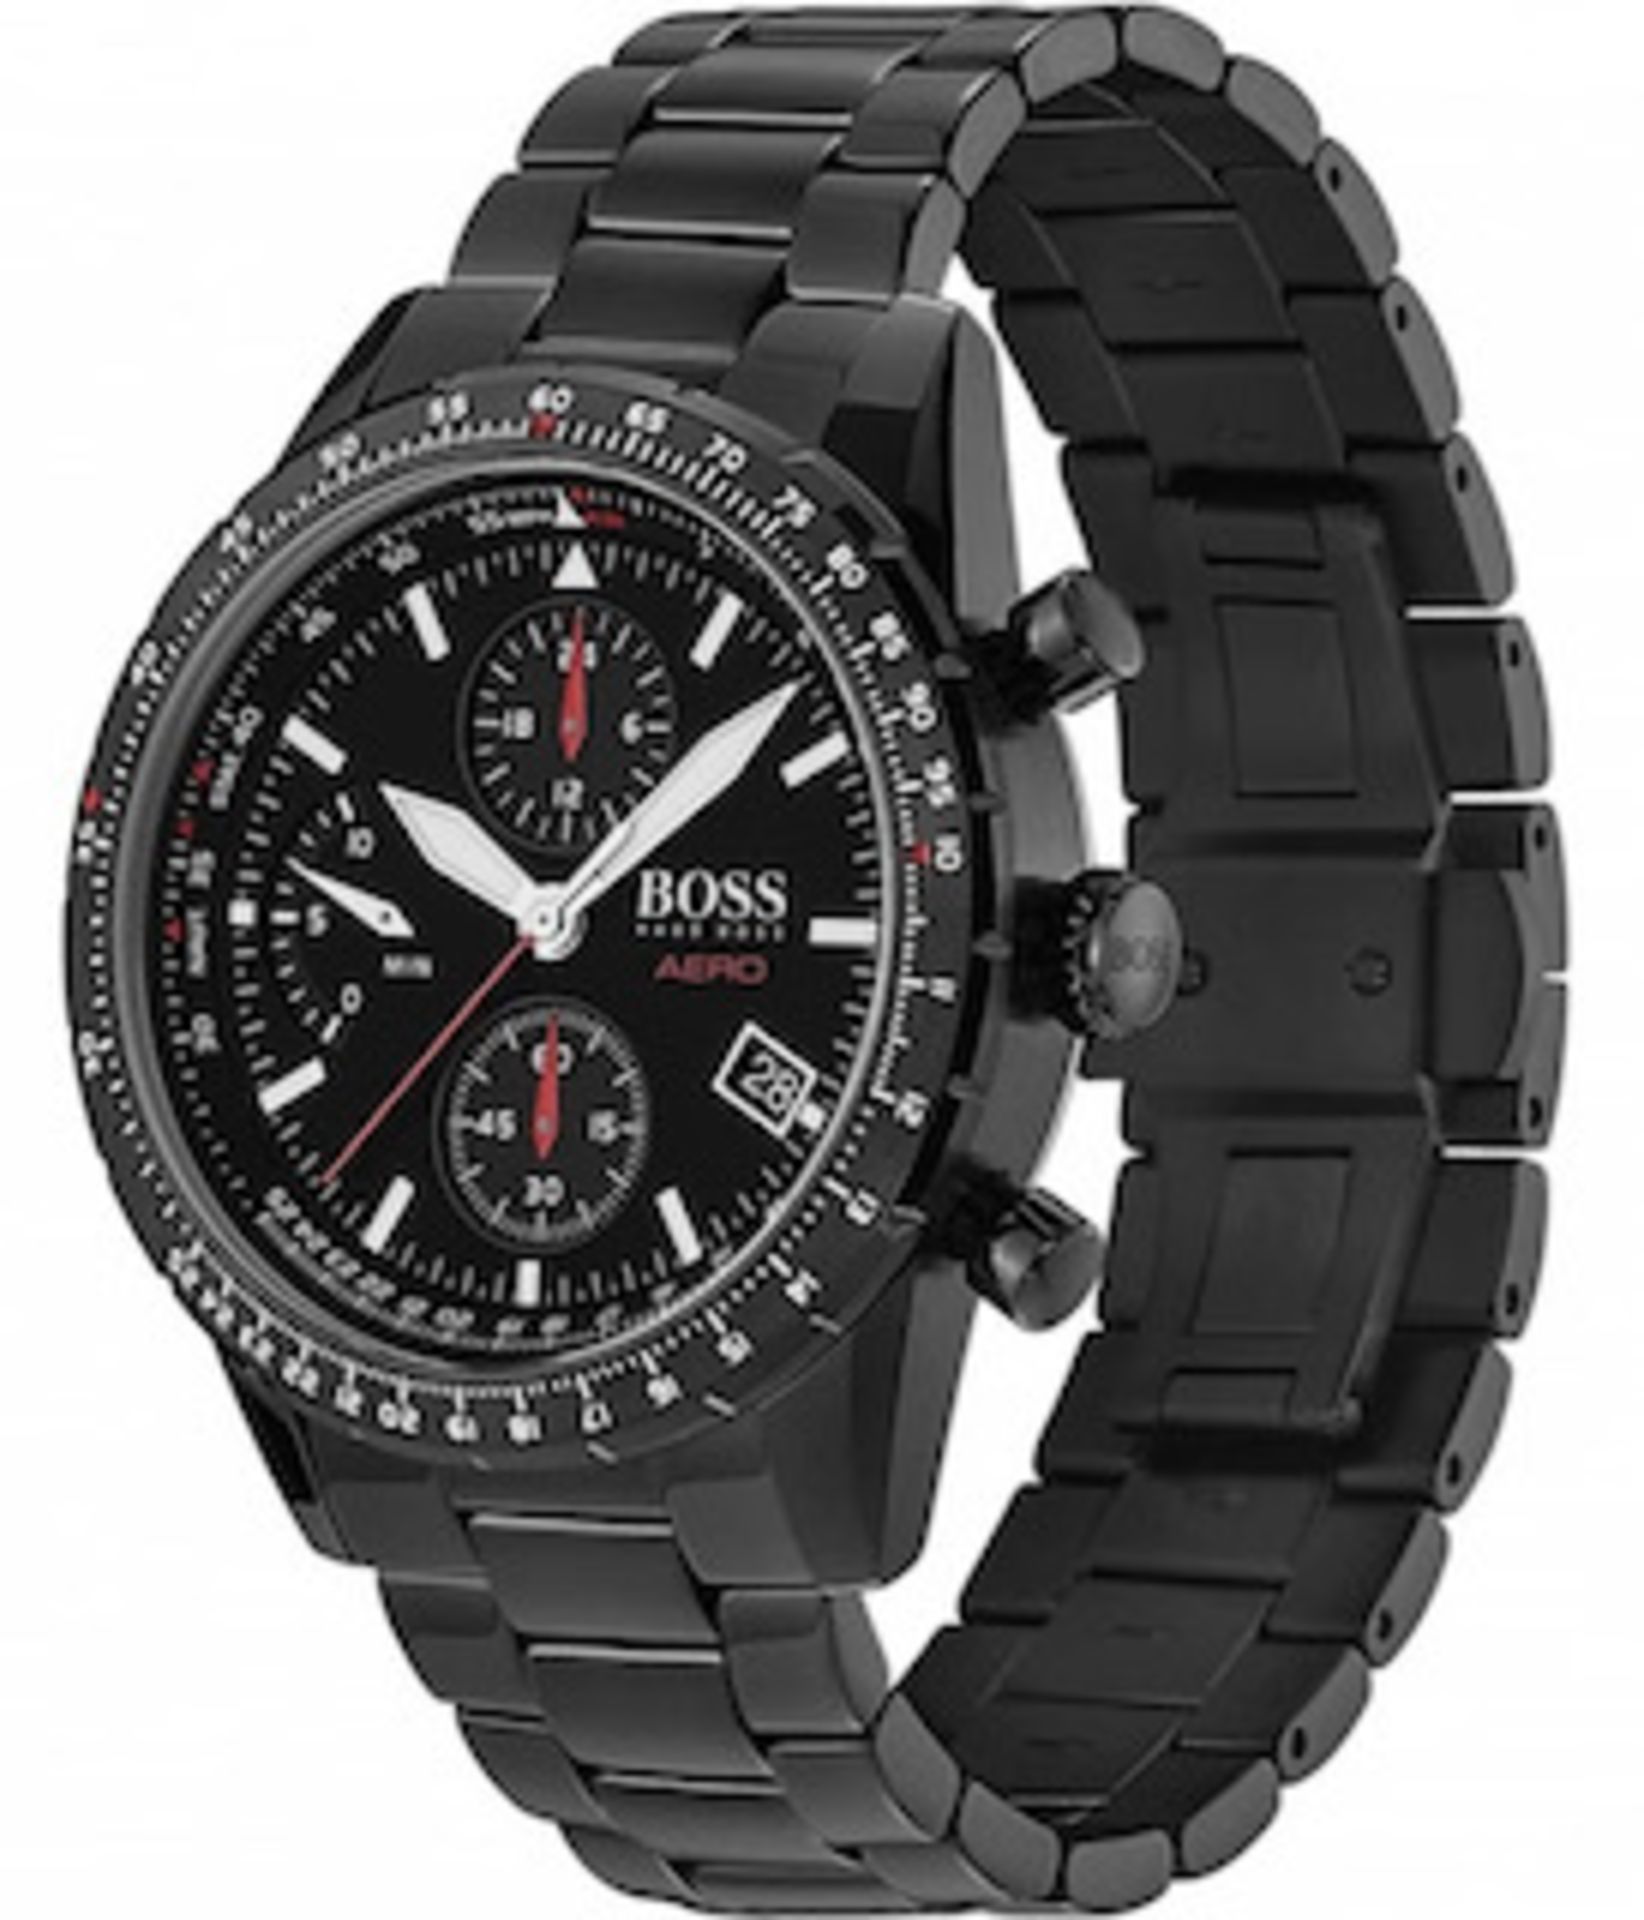 Hugo Boss 1513771 Men's Aero Black Stainless Steel Bracelet Chronograph Watch - Image 2 of 4